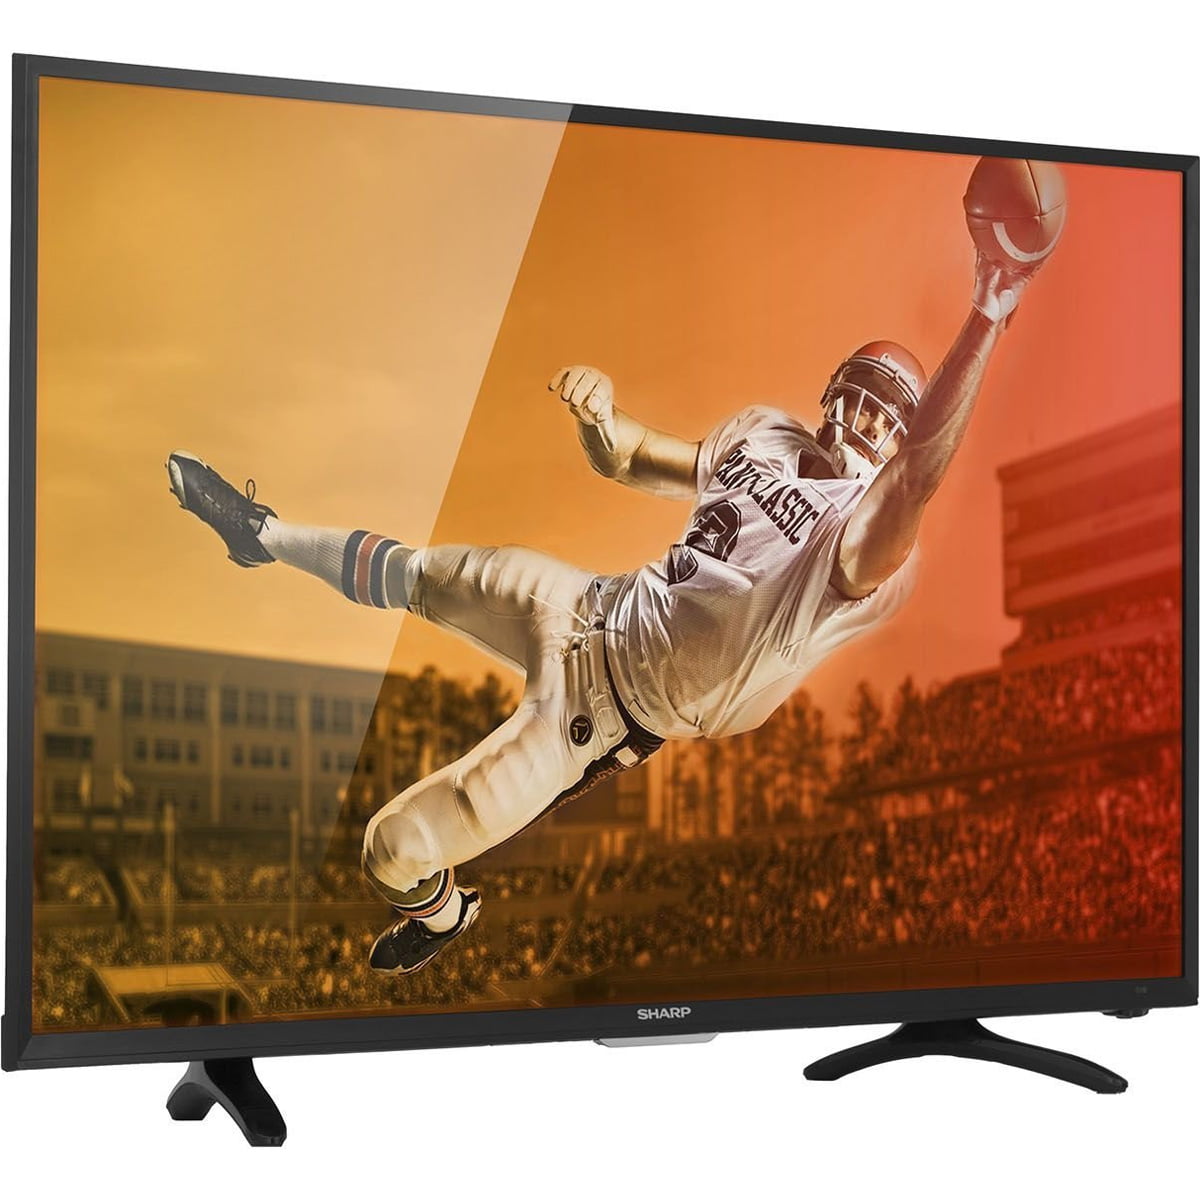 Sharp 50" Class FHD (1080p) LED TV (LC-50N3100U) - Walmart.com